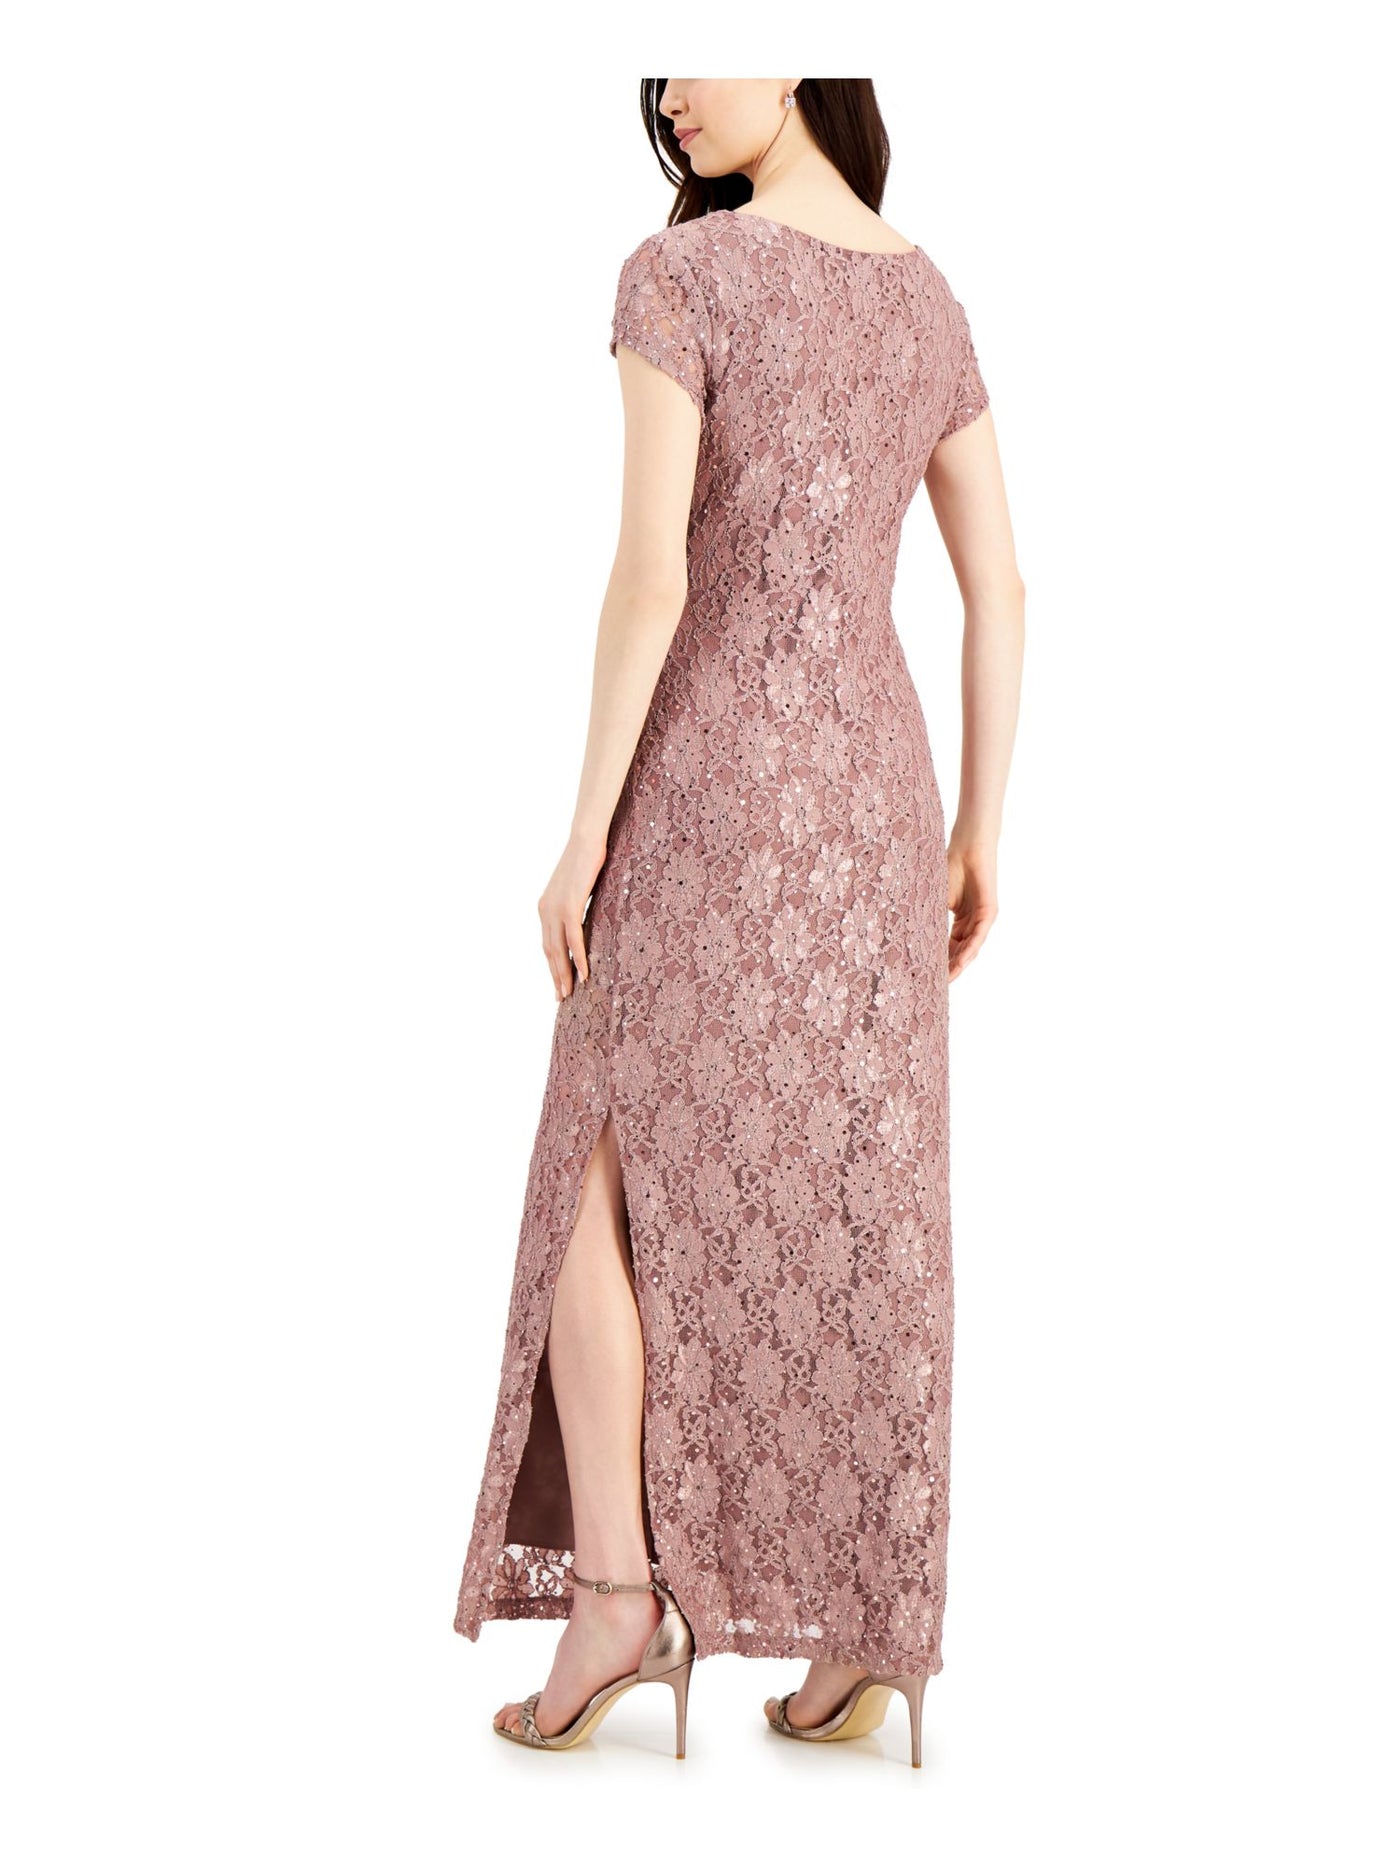 CONNECTED APPAREL Womens Pink Sequined Short Sleeve V Neck Full-Length Formal Dress 4